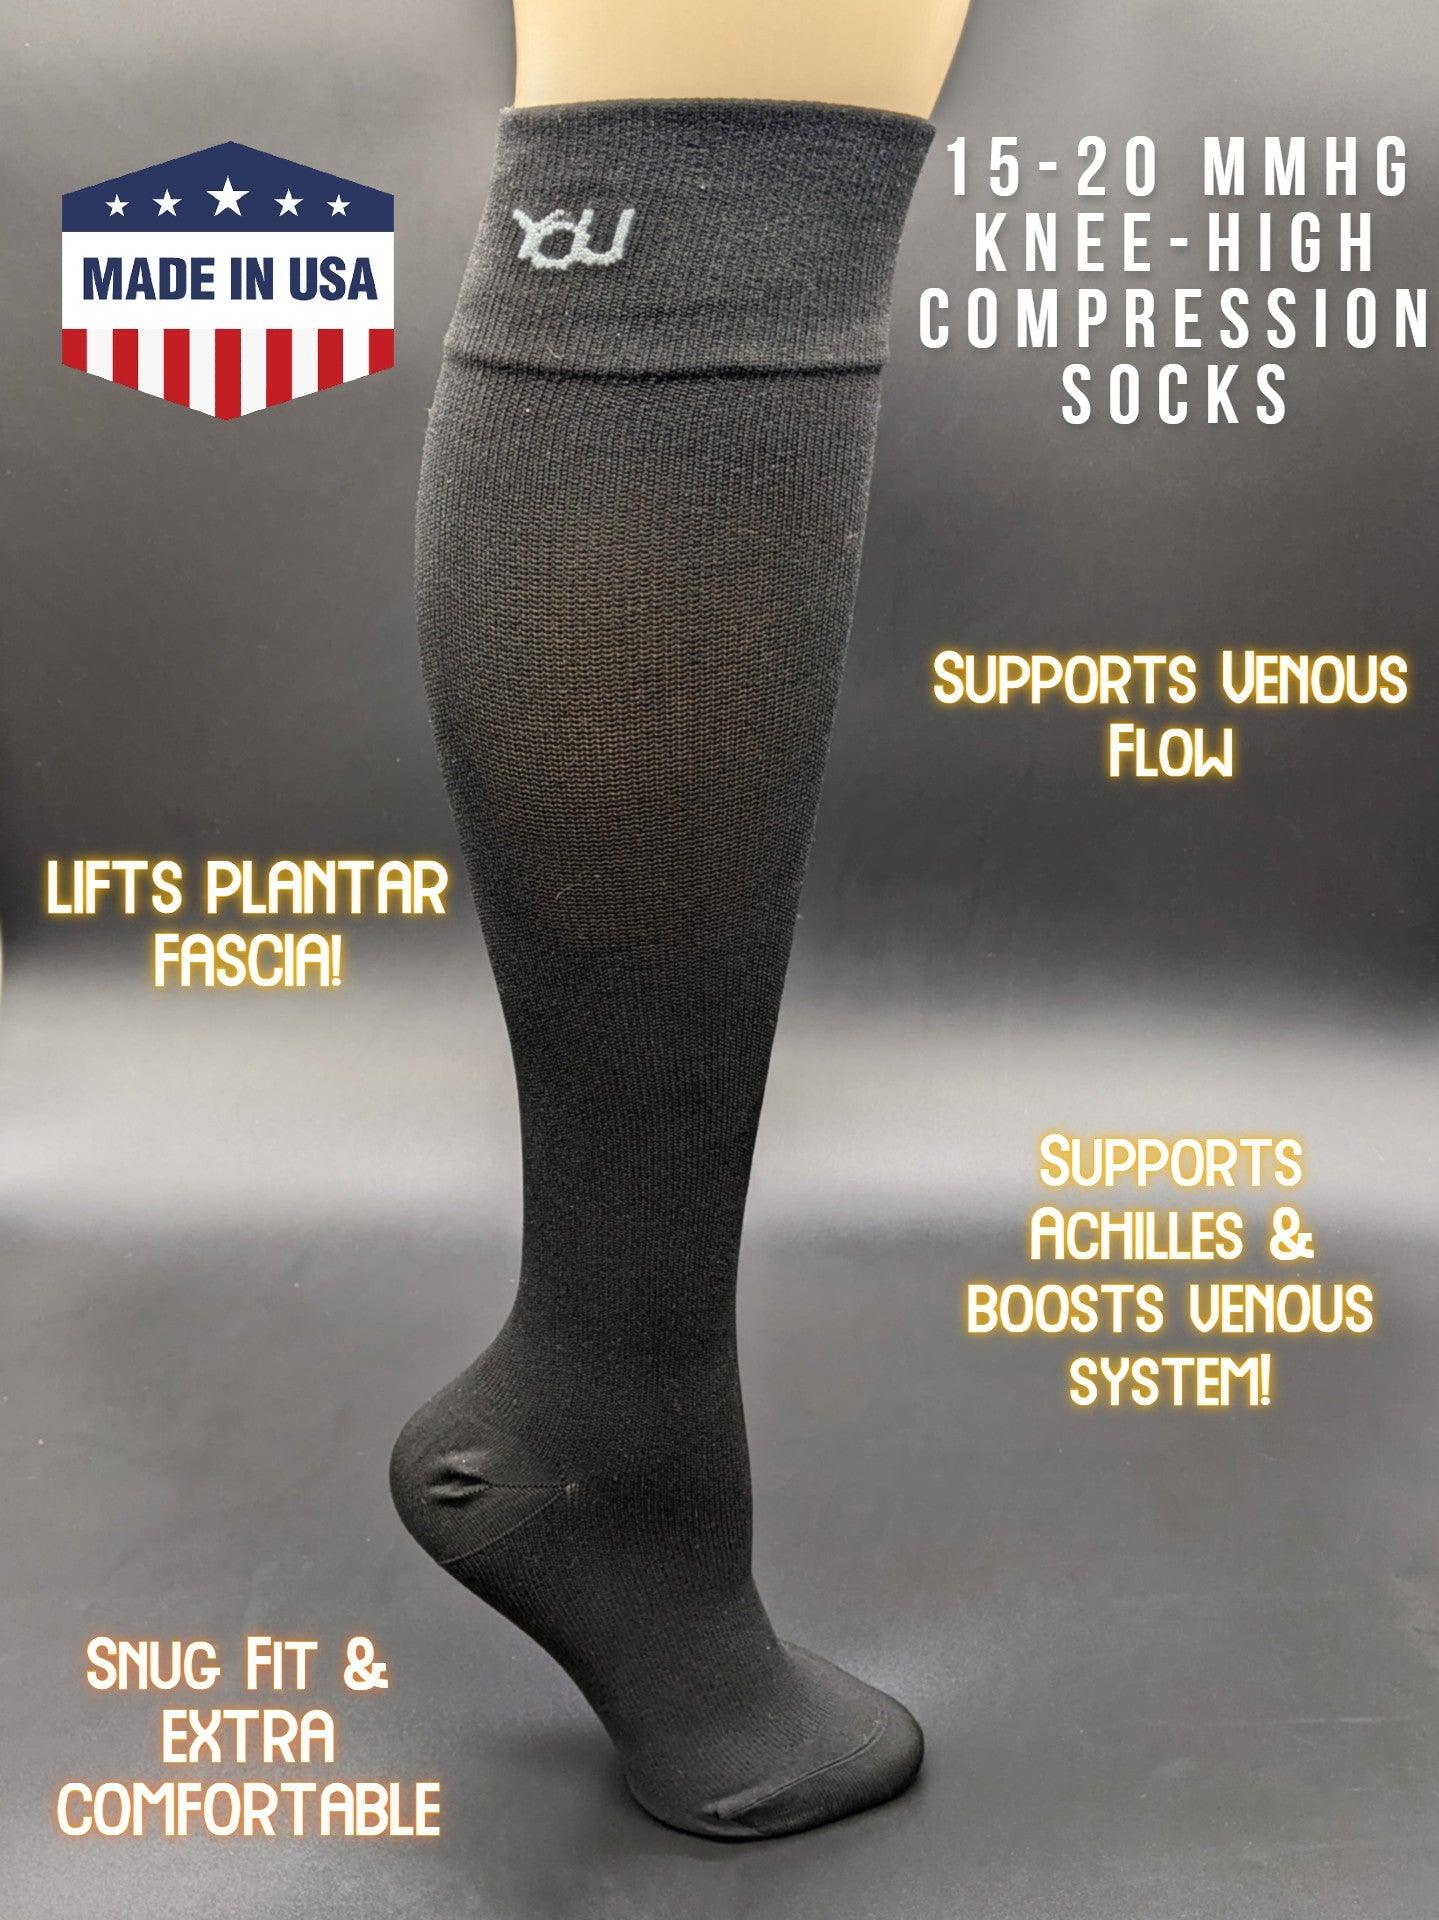 Medium Compression Socks 15-20 mmHg - Knee High - 761K99-SB Medium Compression Socks 15-20 mmHg - Knee High - undefined by Supply Physical Therapy 15-20 mmhg, Compression socks